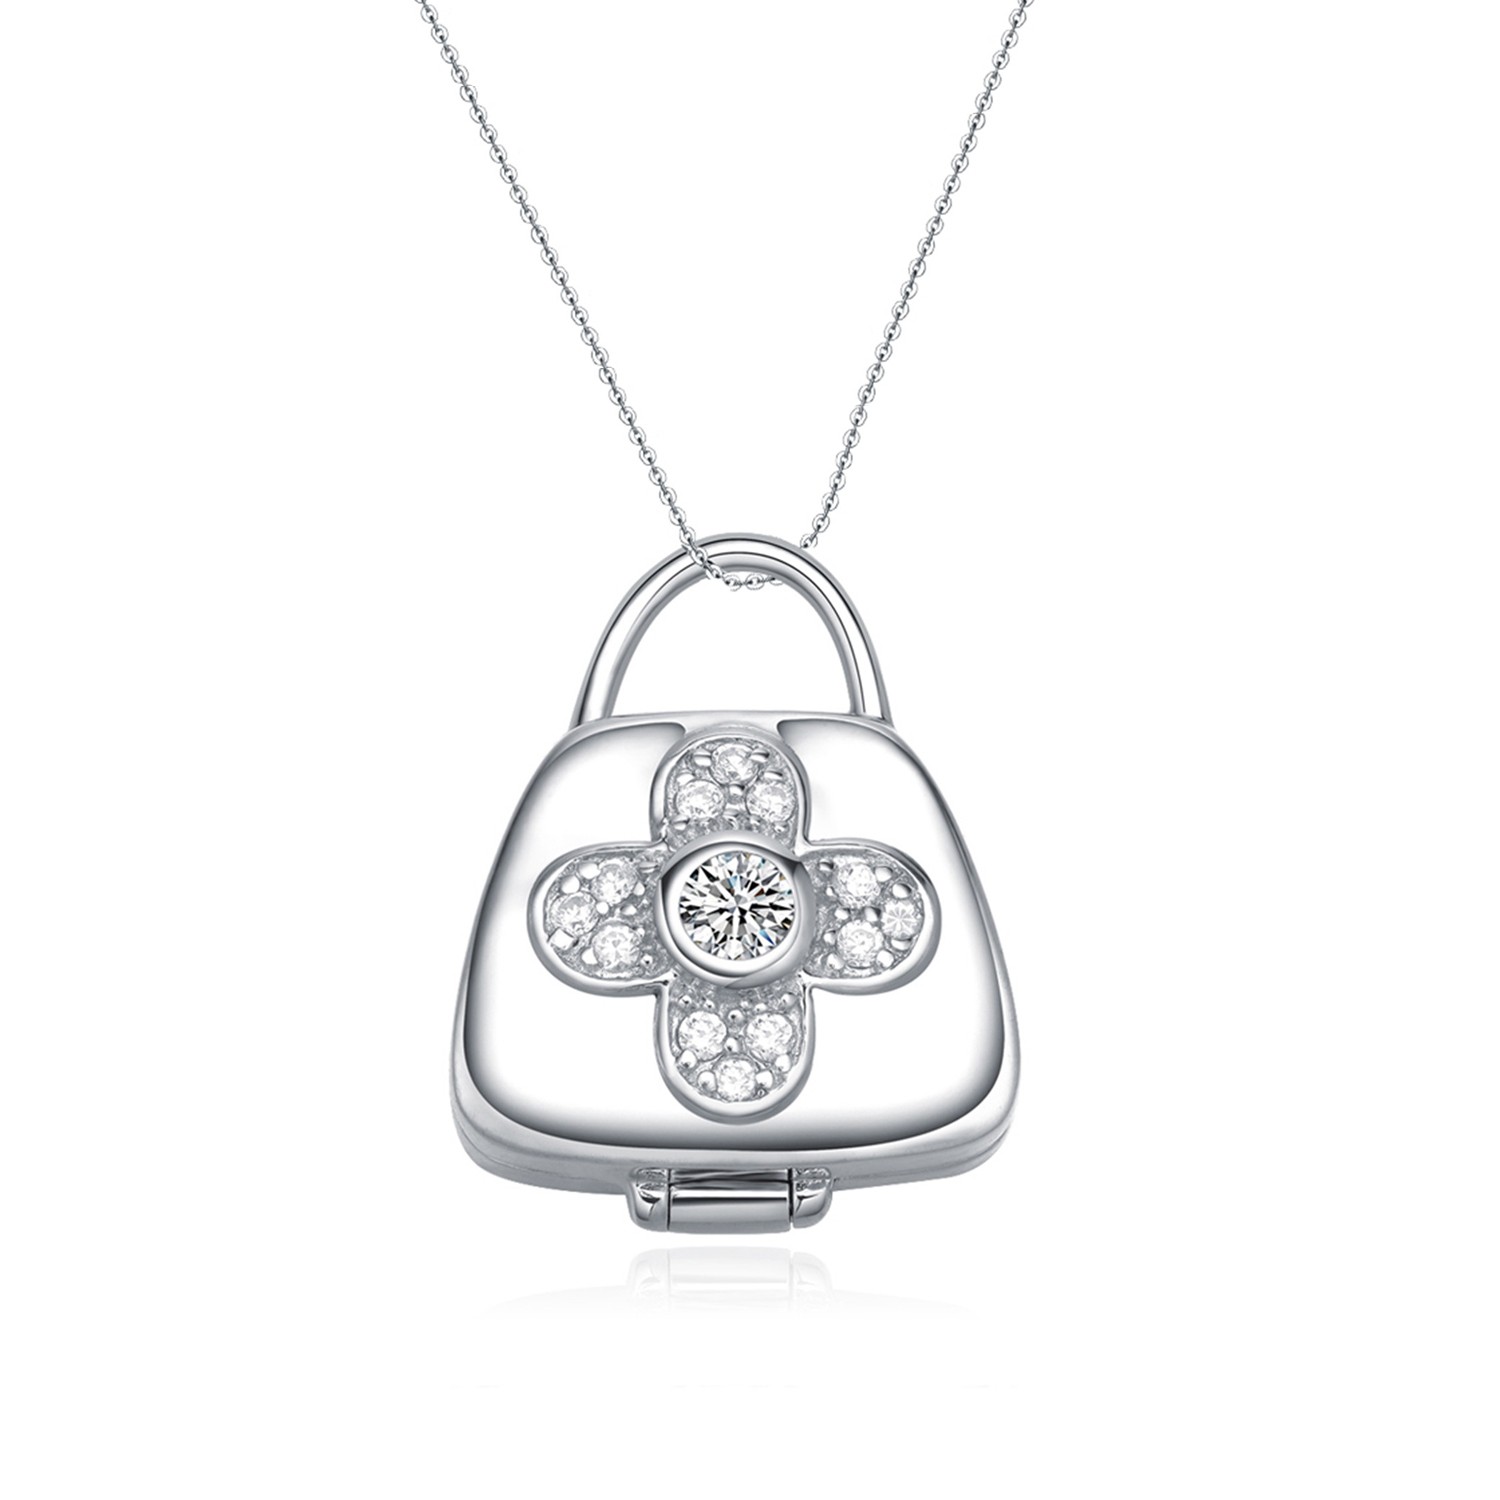 Fashion Latest Sterling Silver Necklace Jewelry CZ Diamond Bag Pendant Necklace Women arabic jewelry